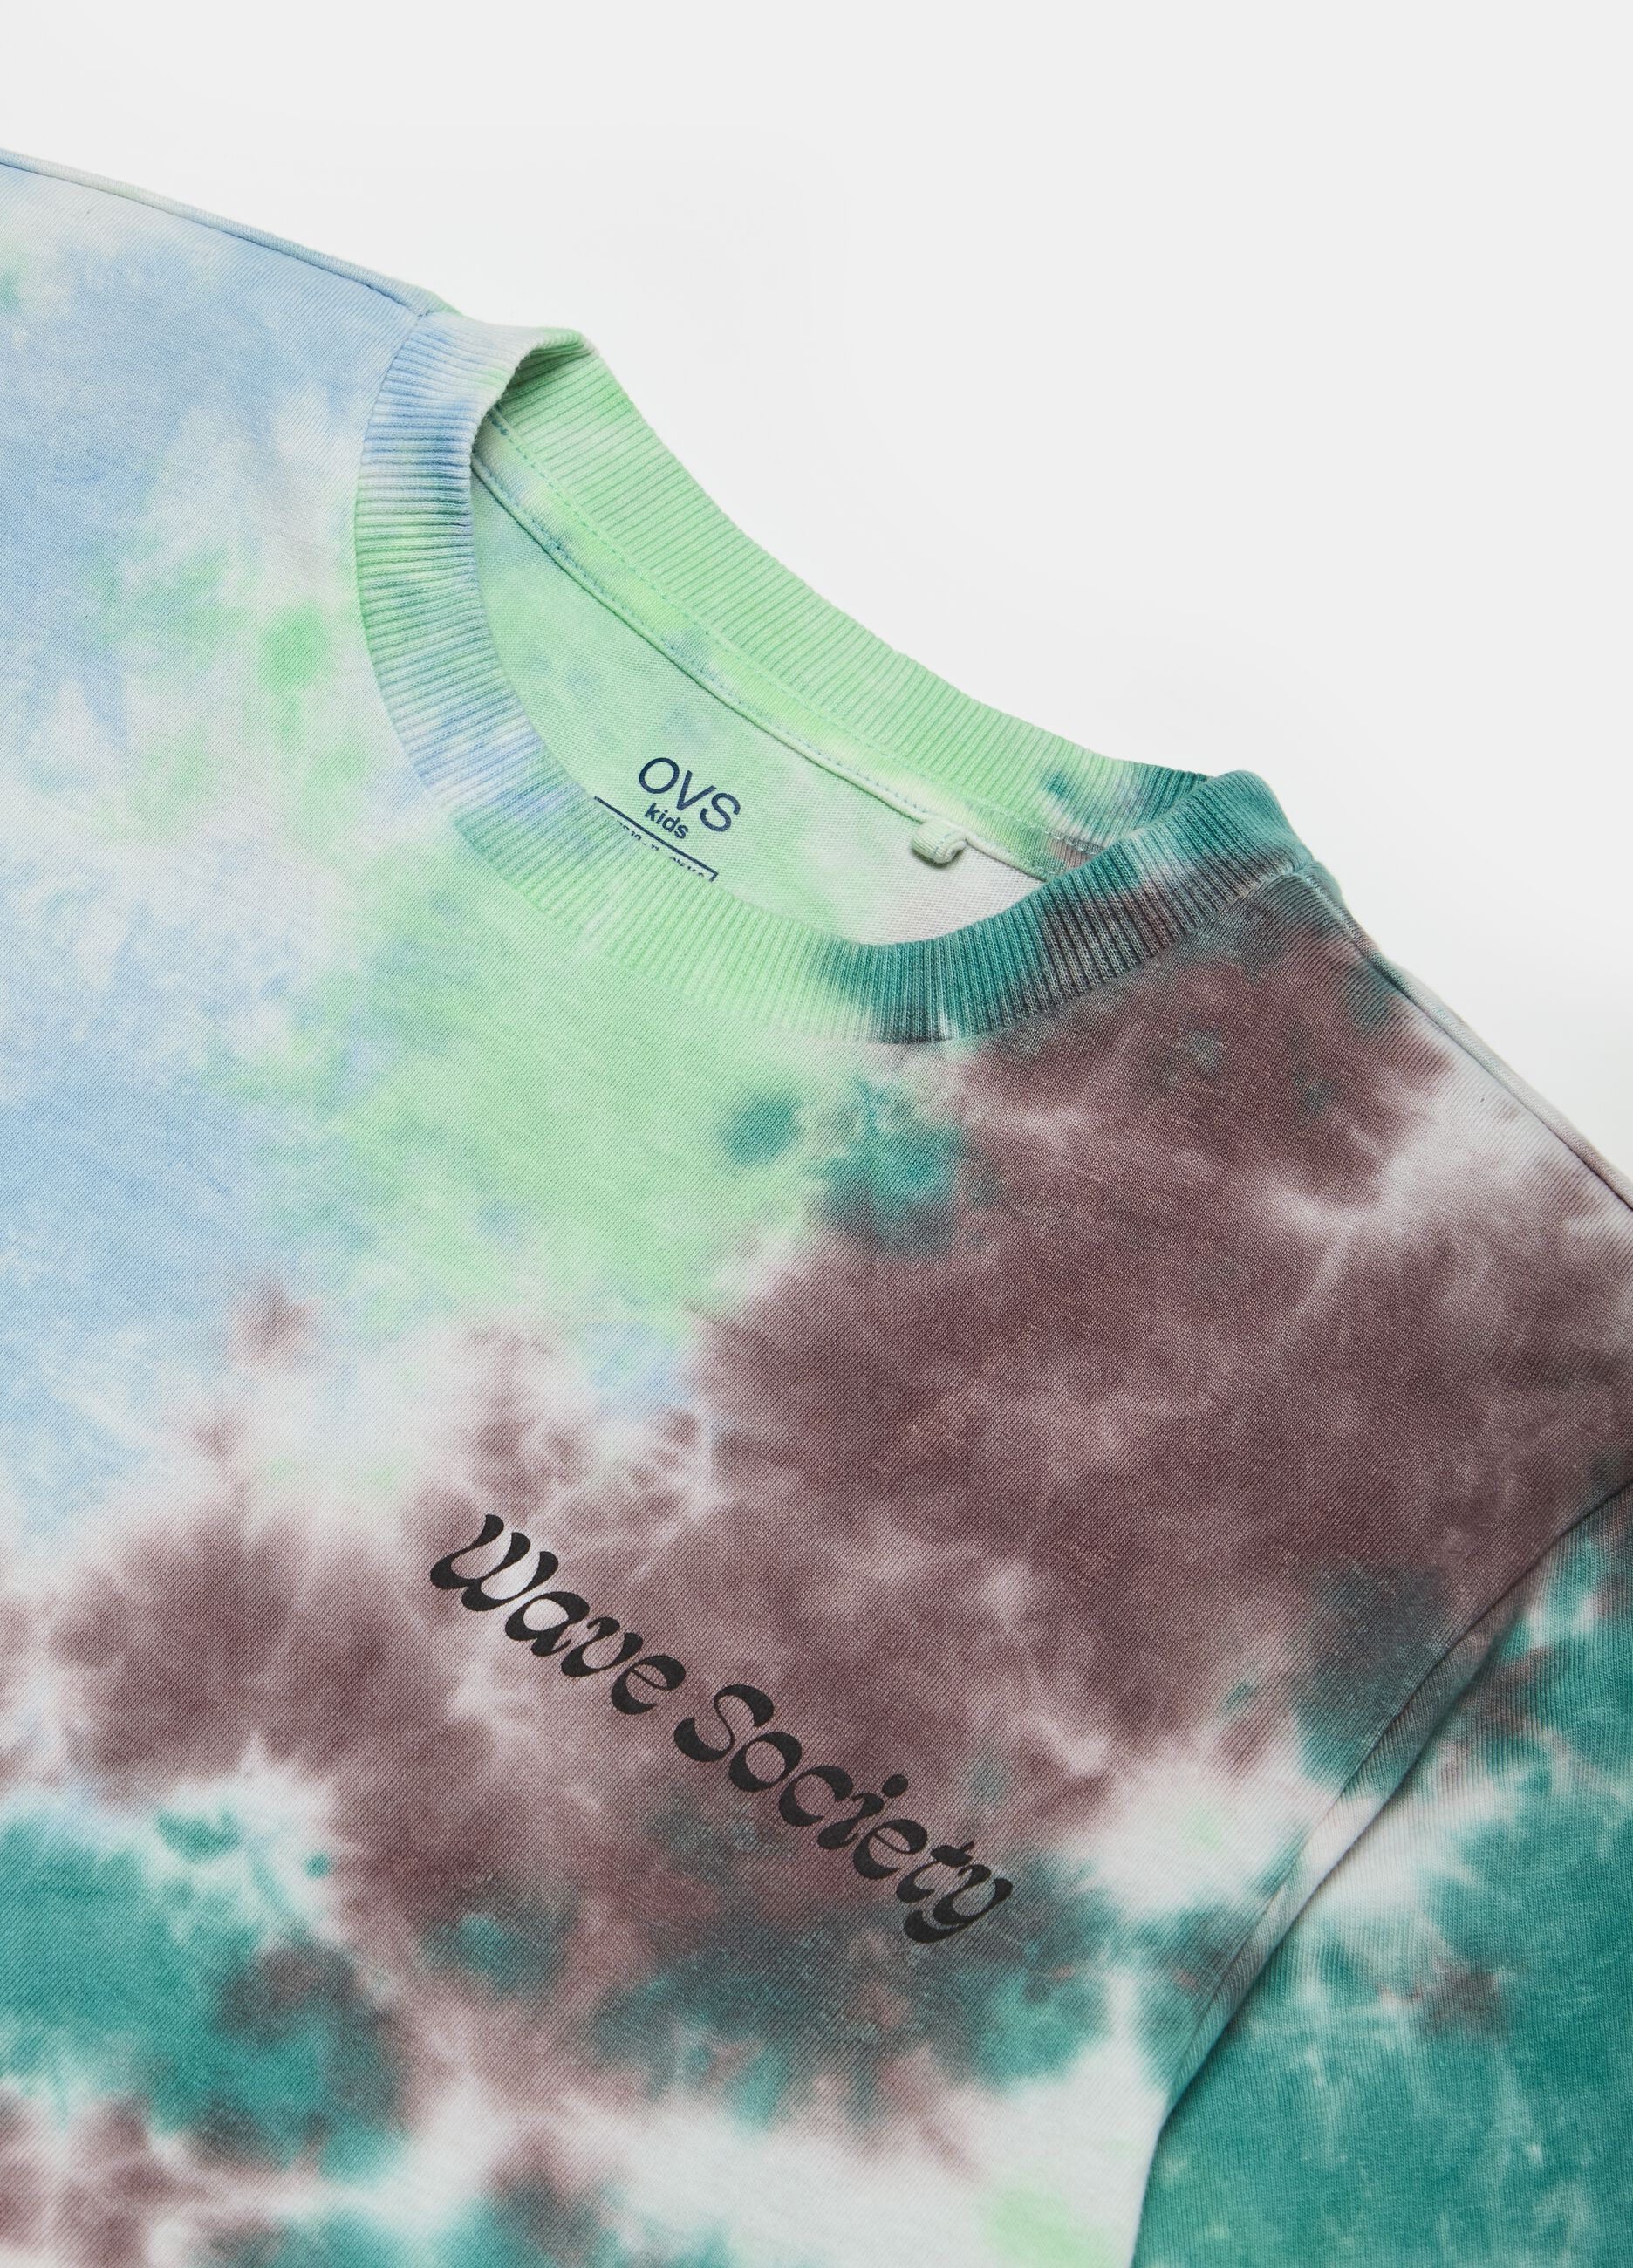 Tie-dye cotton T-shirt with print